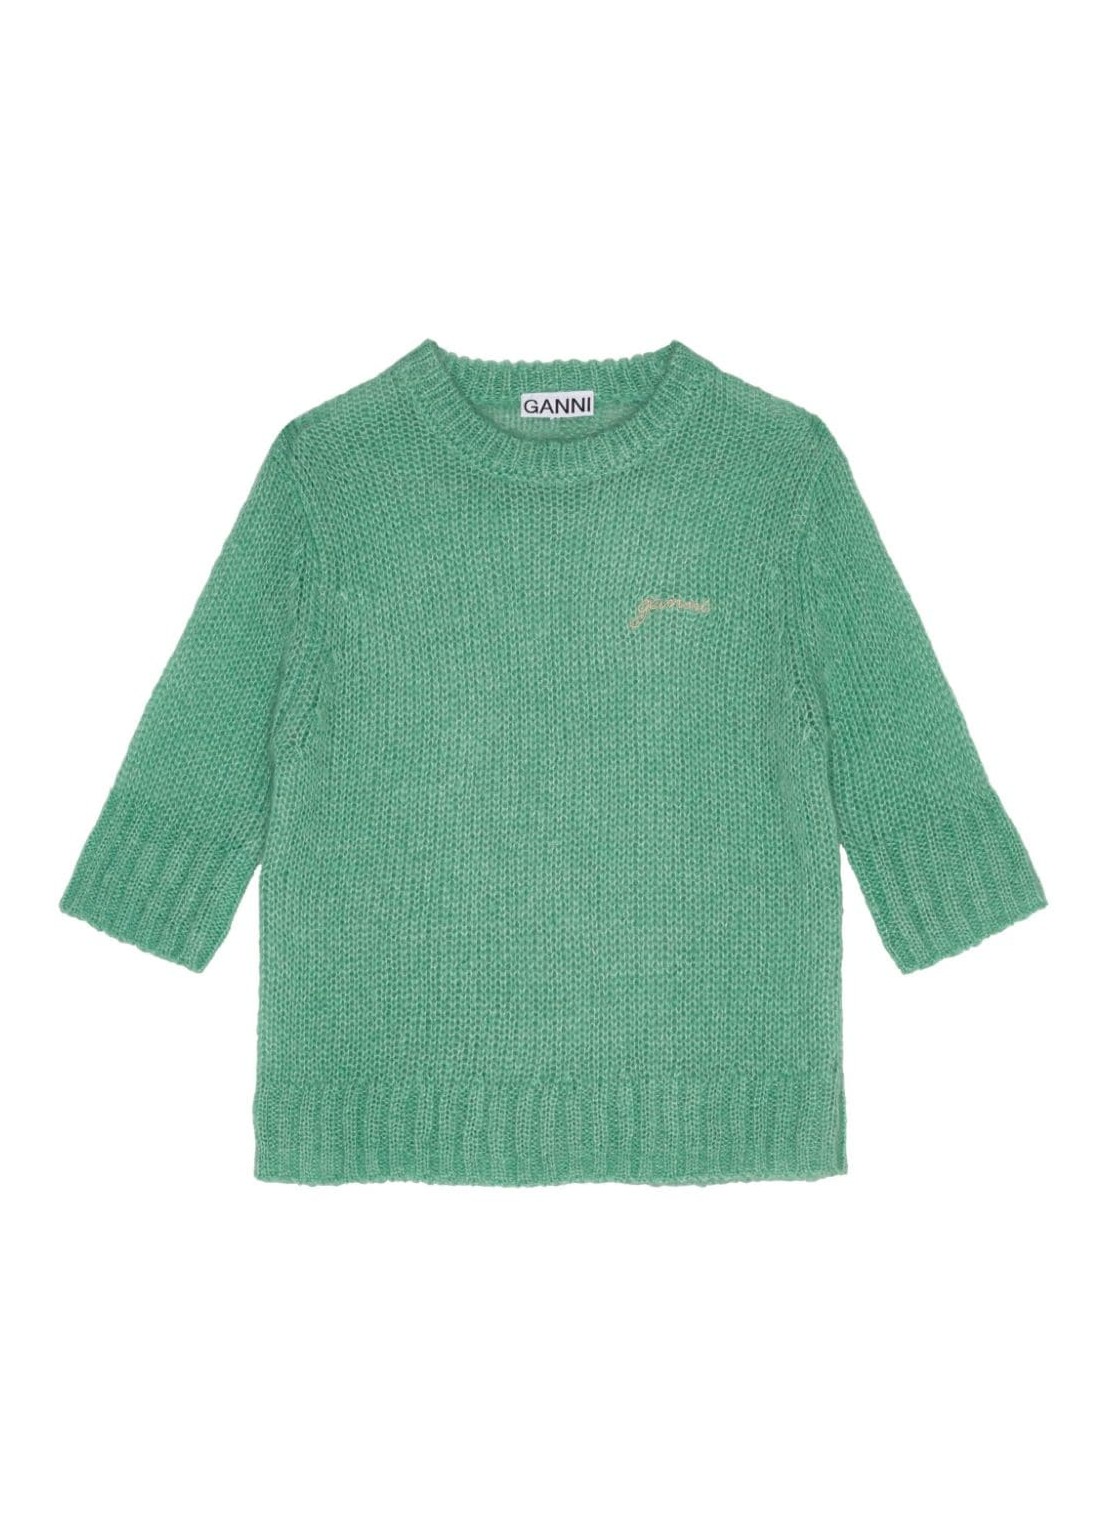 Punto ganni knitwear woman mohair short sleeve o-neck k2210 879 talla verde
 